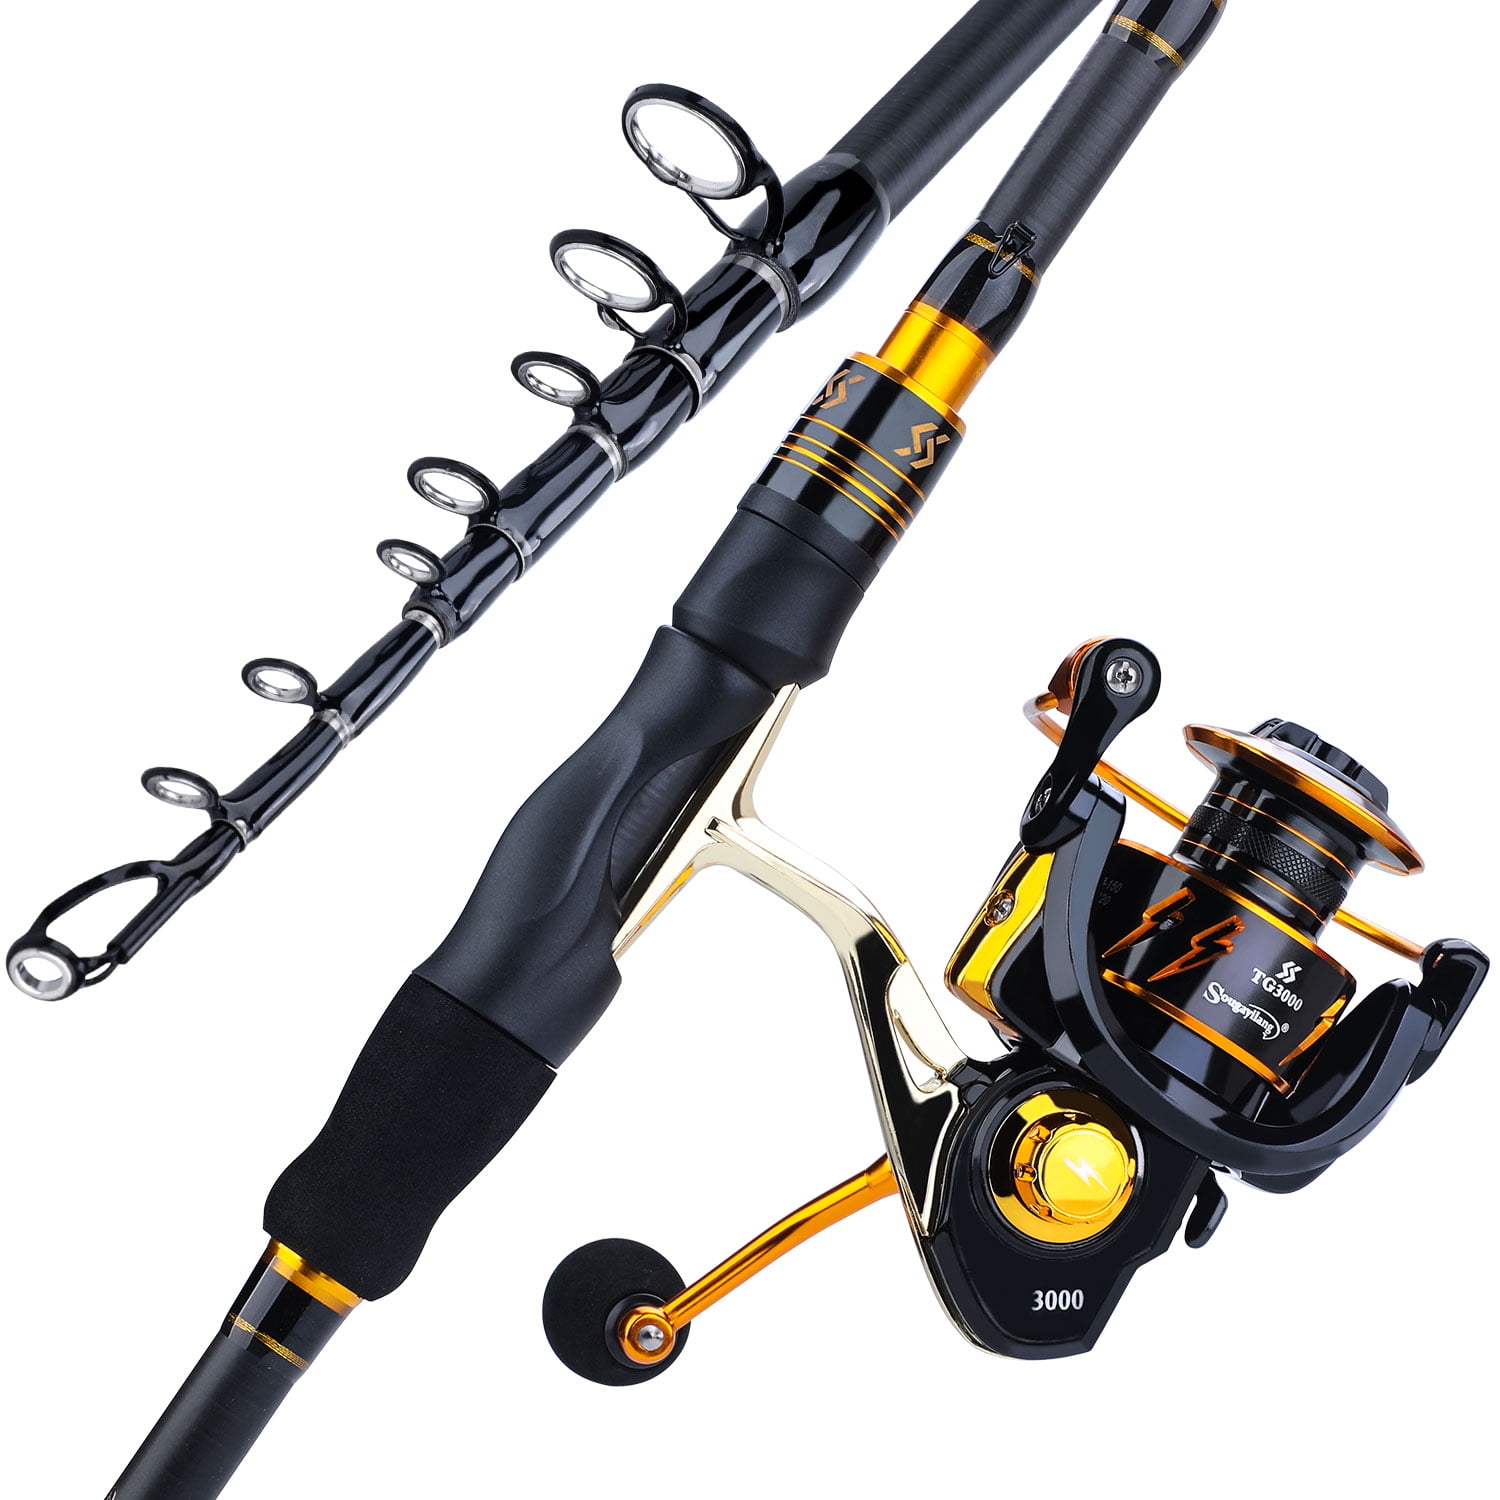 Sougayilang 1.8-3.6m Telescopic Fishing Rod and 11BB Fishing Reel